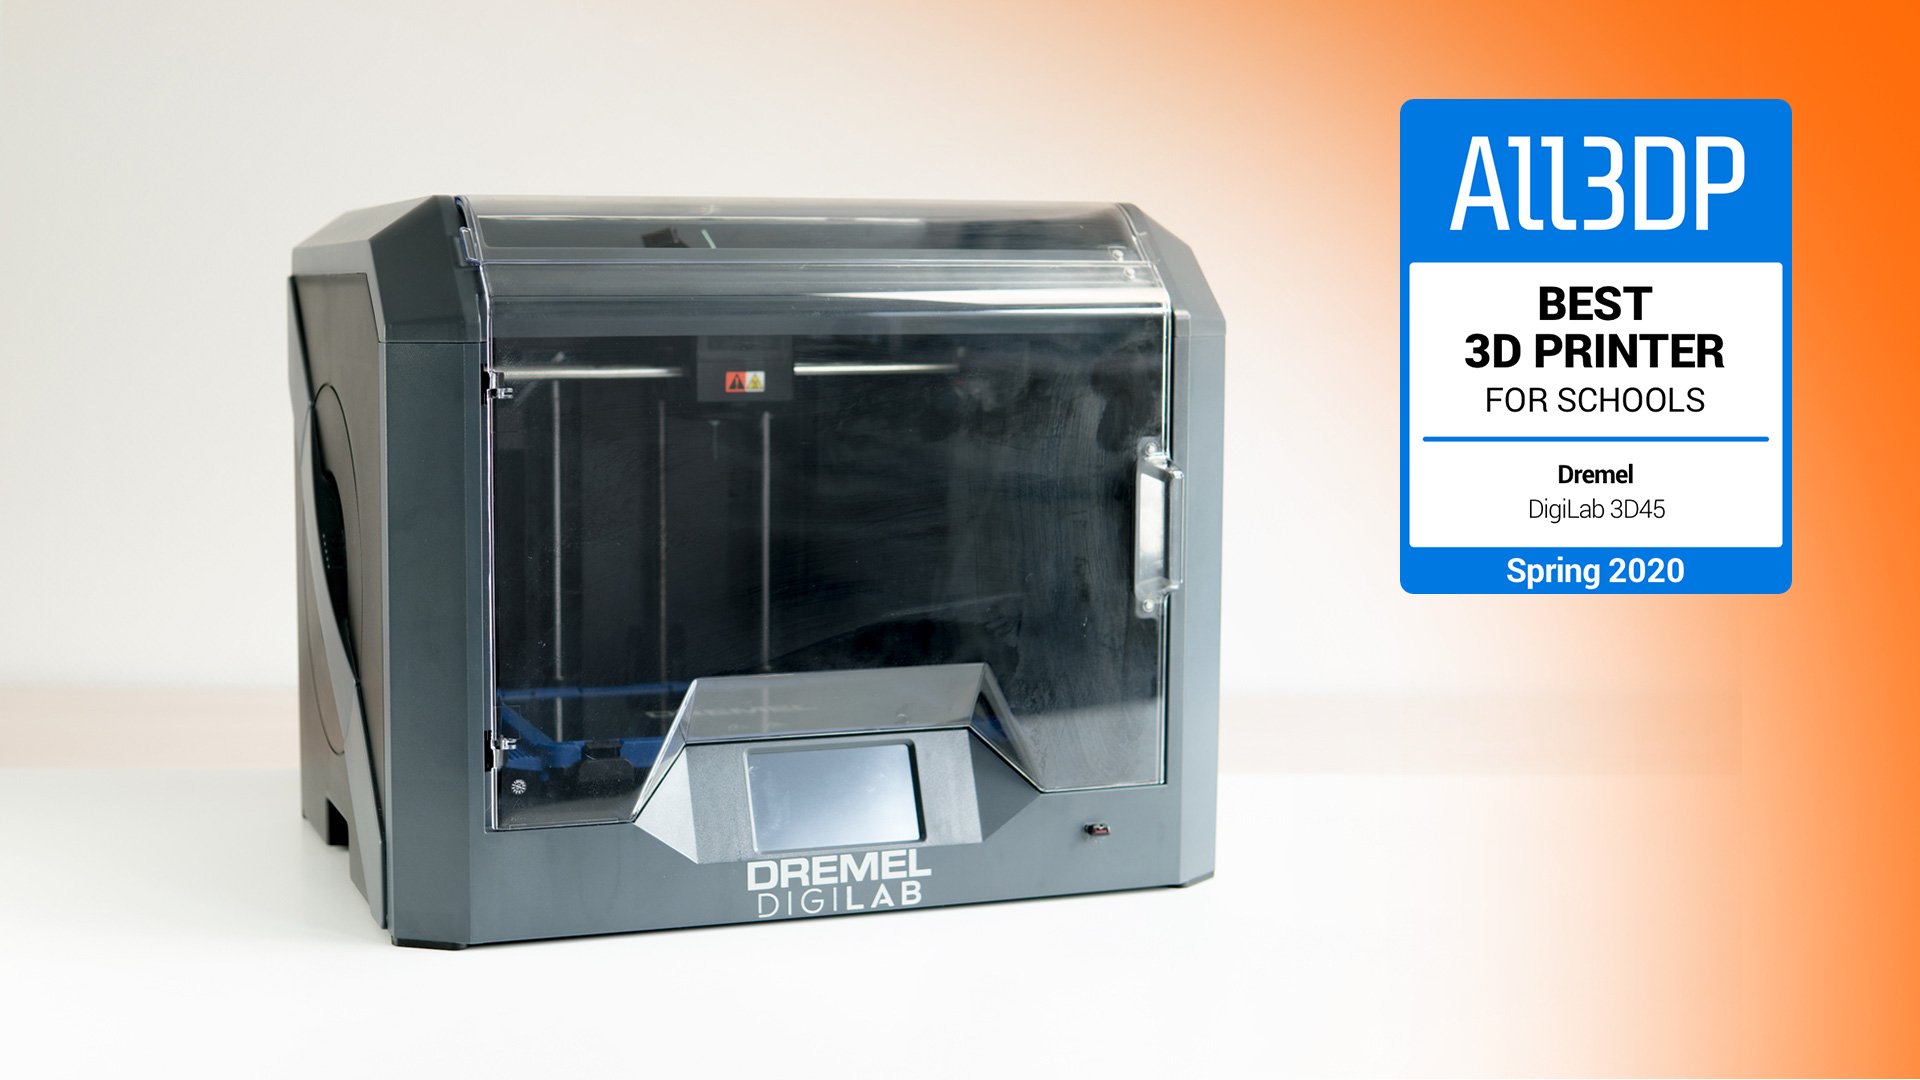 Dremel DigiLab 3D45 Best 3D Printer for 2020 All3DP Pro